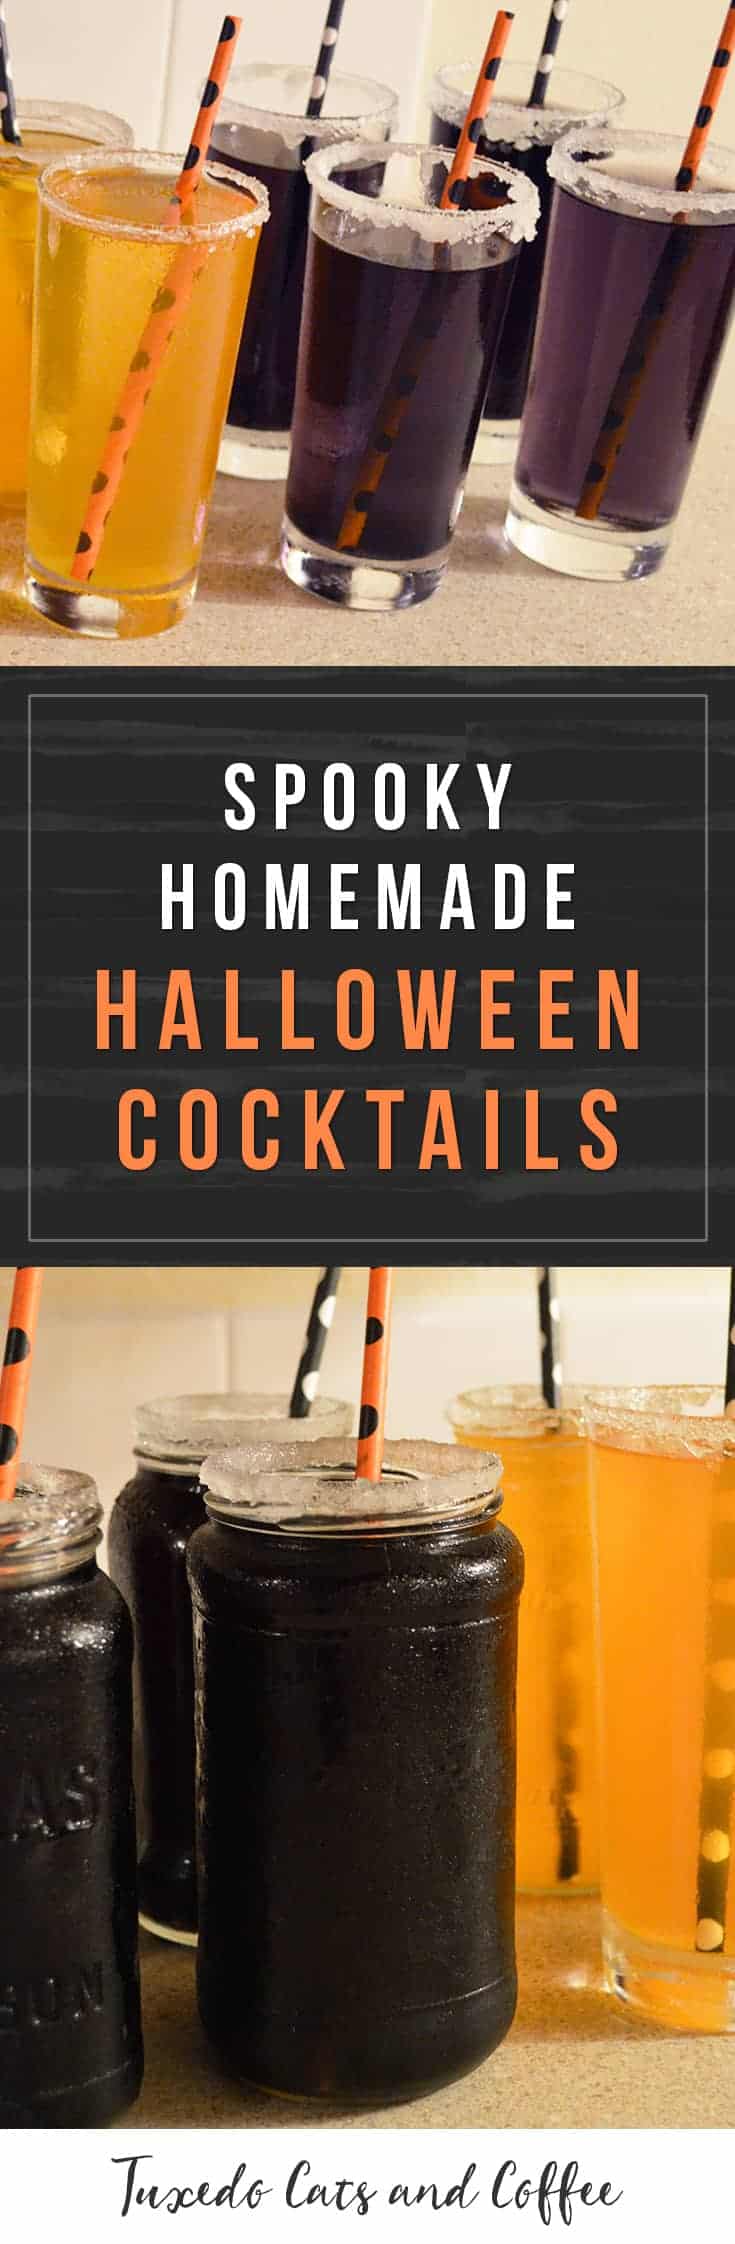 Spooky Homemade Halloween Cocktails